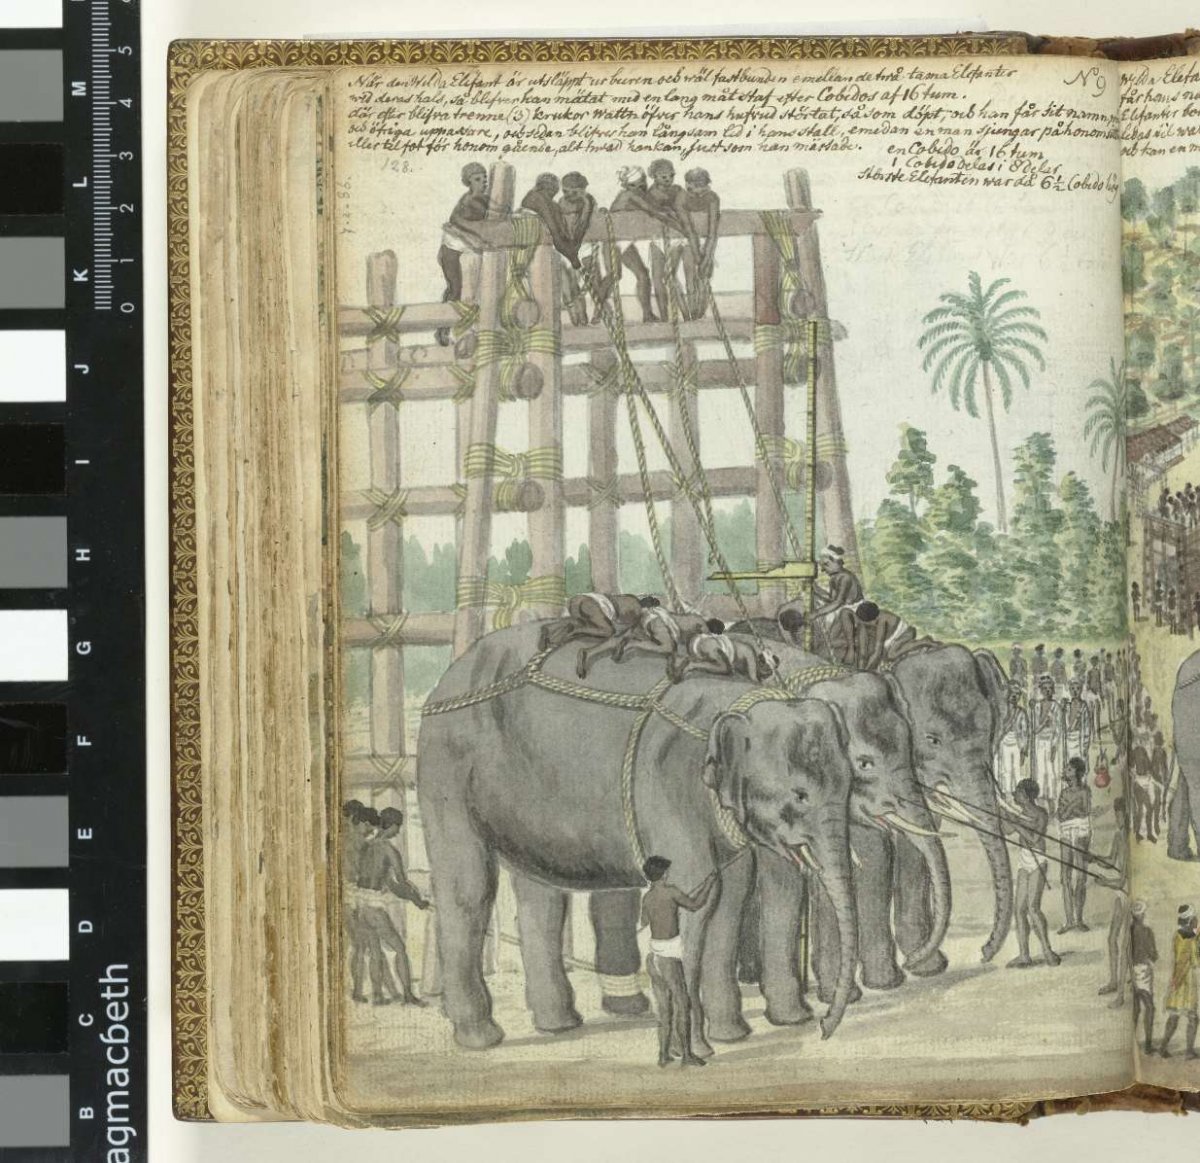 Binding elephants, Jan Brandes, 1785